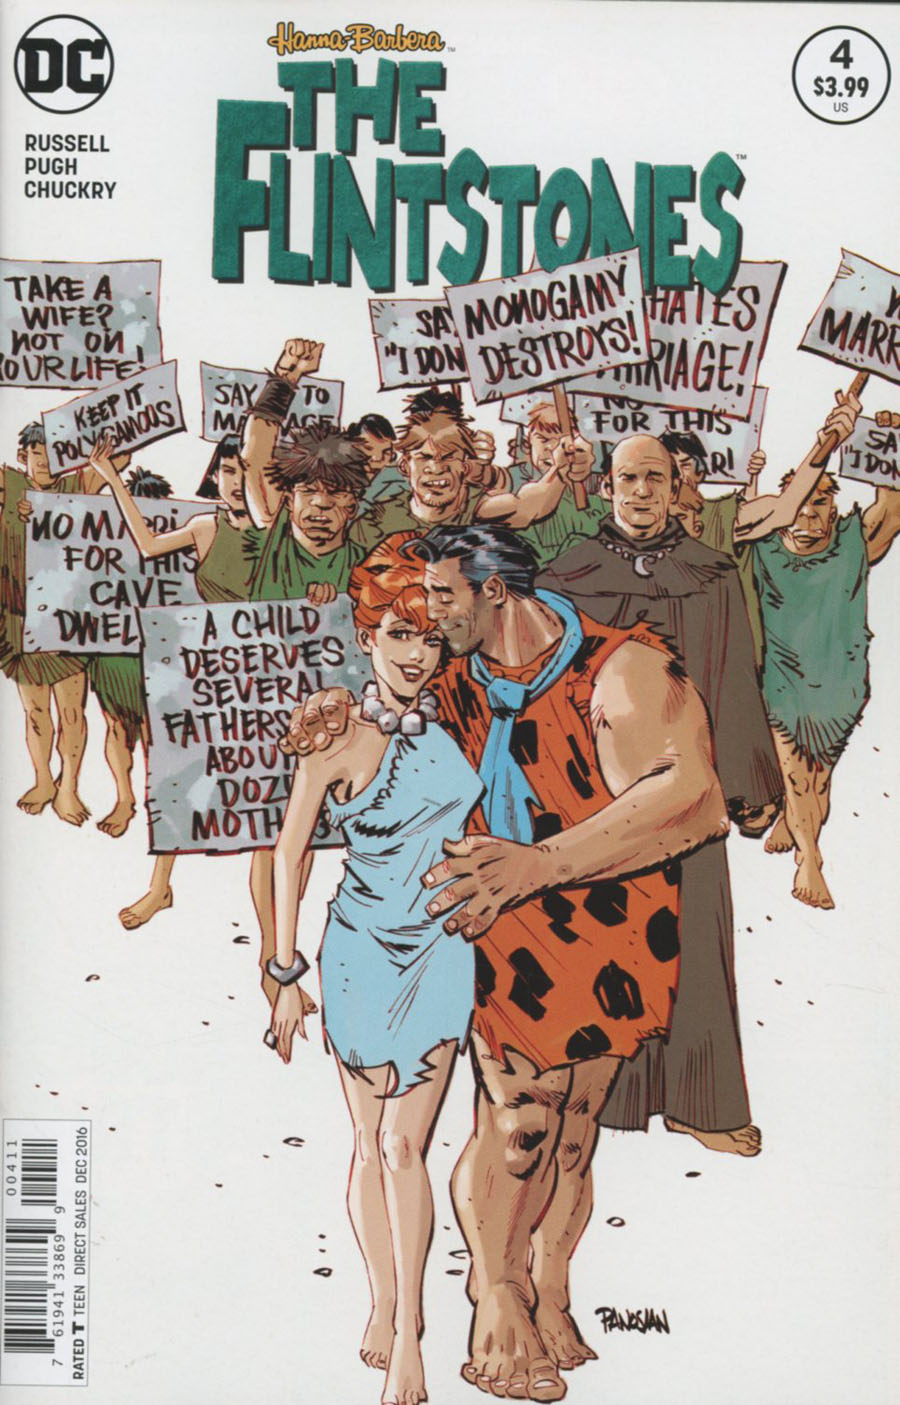 Flintstones (DC) #4 Cover A Regular Dan Panosian Cover